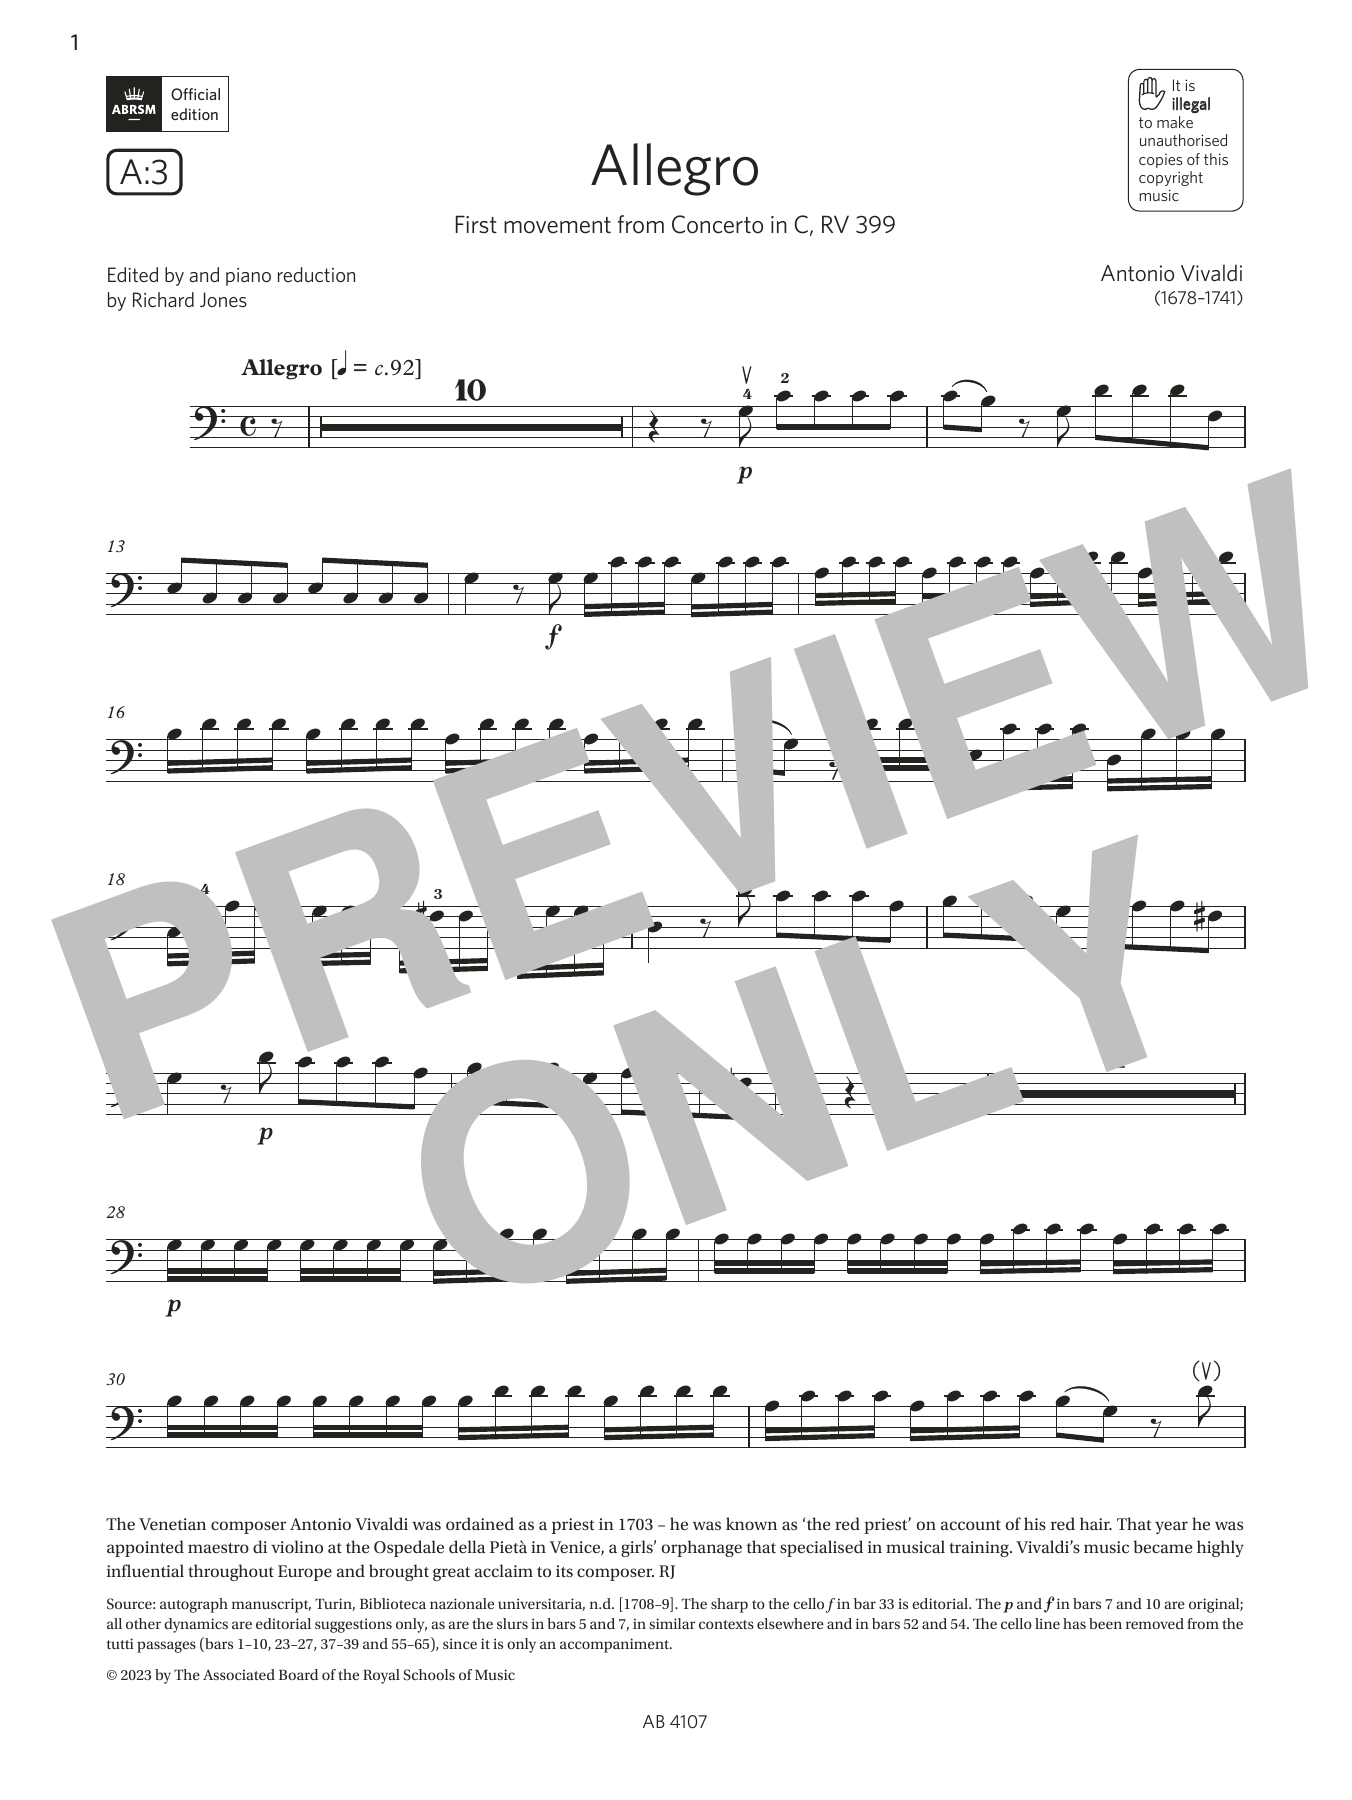 Download Antonio Vivaldi Allegro (Grade 4, A3, from the ABRSM Ce Sheet Music